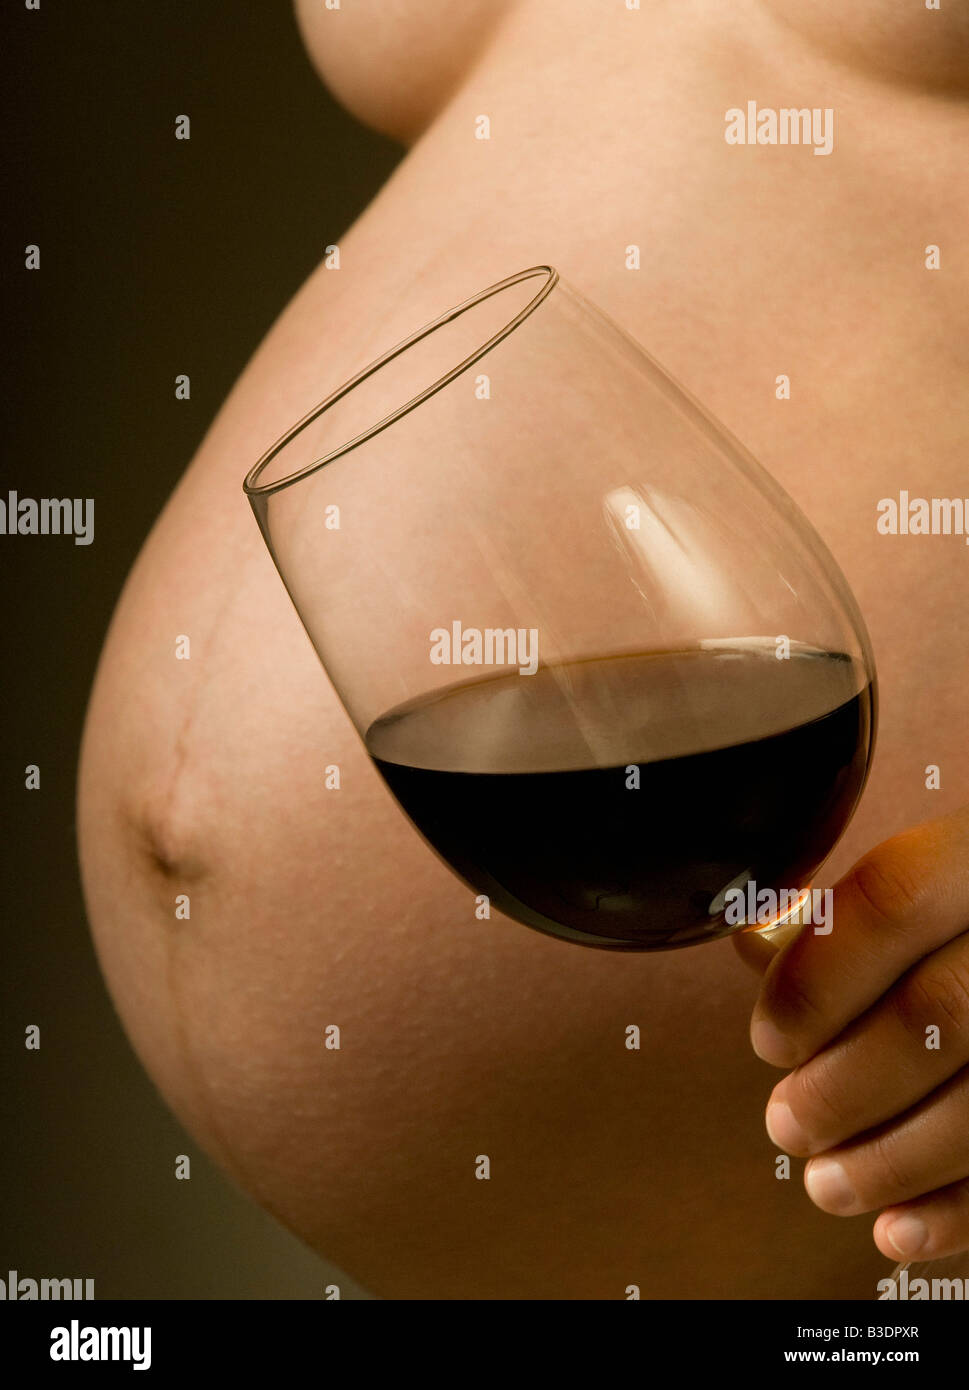 PREGNANT WOMAN DRINKING ALCOLHOL Stock Photo